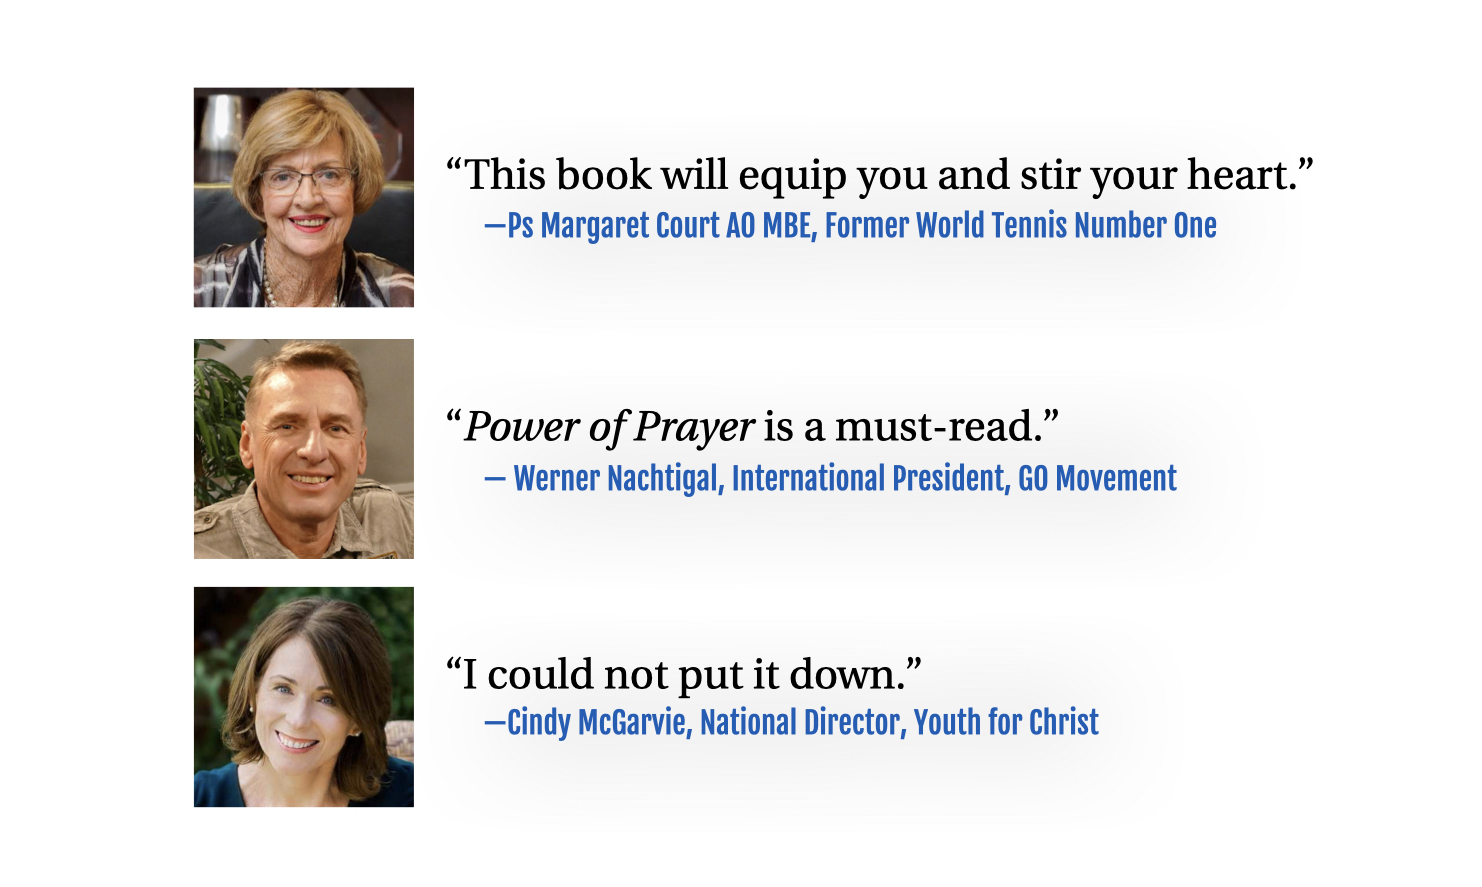 Power of Prayer book endorsements